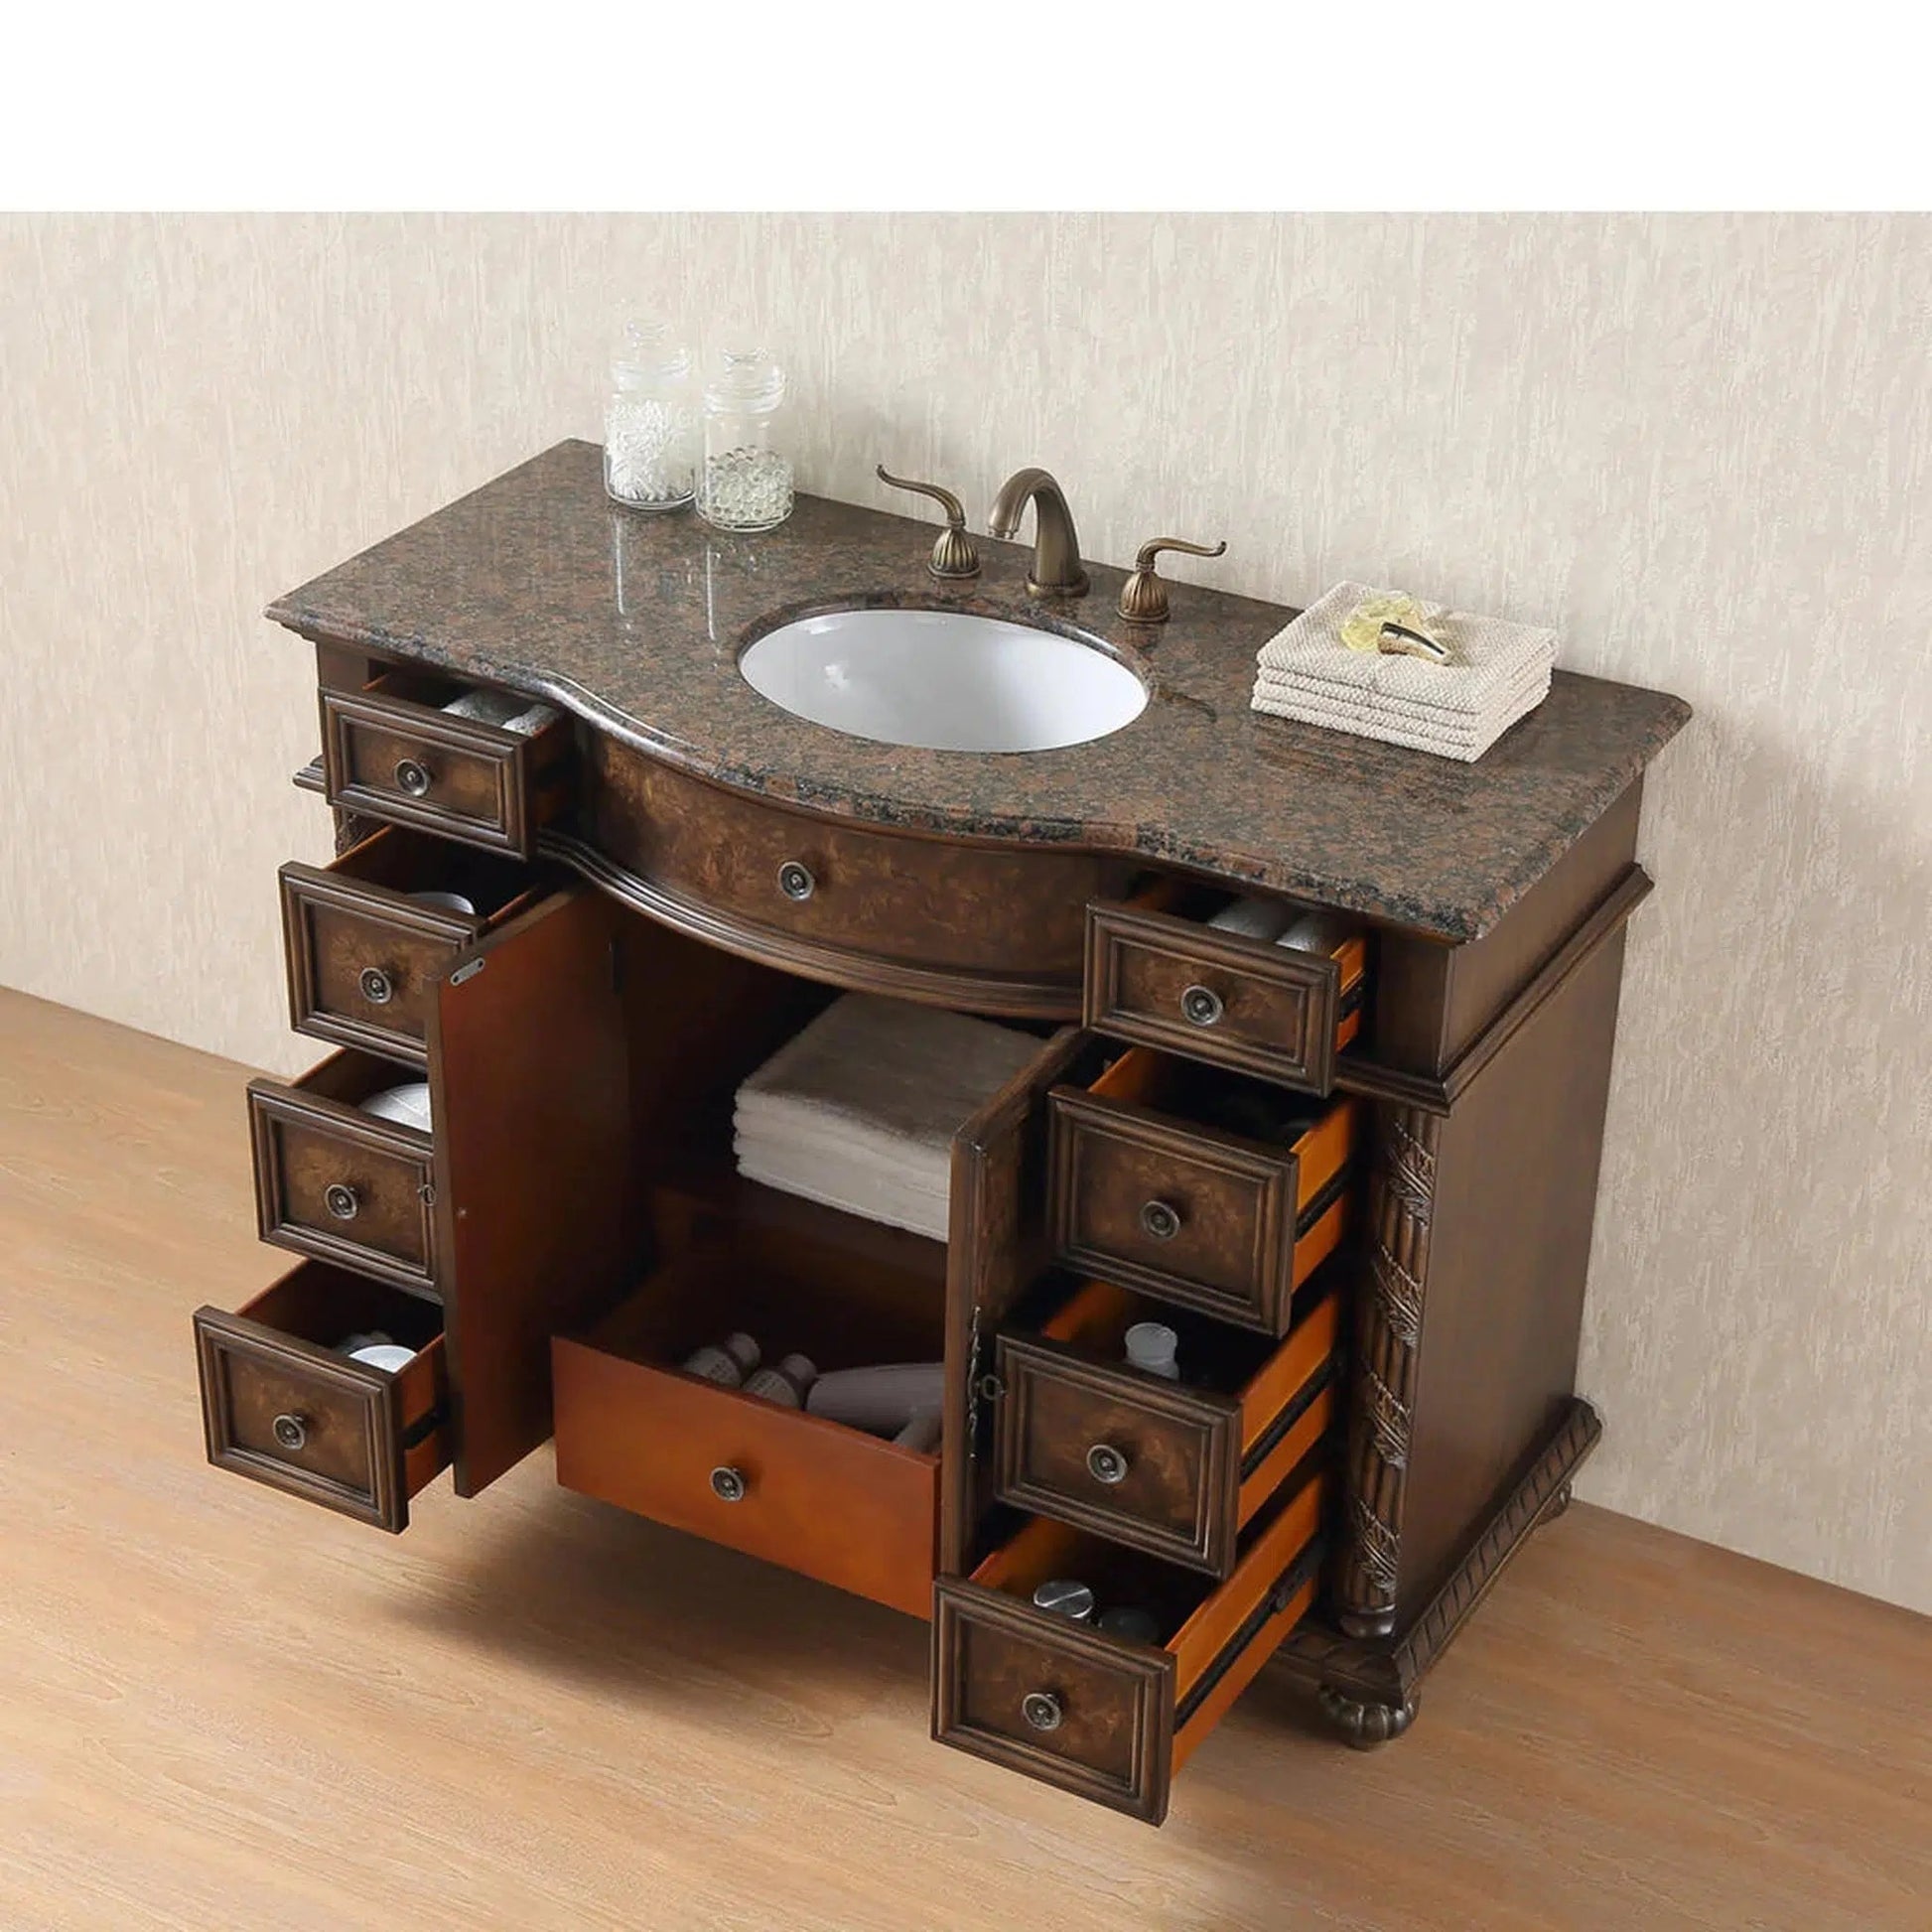 Stufurhome Reginald 48" English Espresso Freestanding Bathroom Vanity With Oval Single Sink, Baltic Brown Granite Countertop, 9 Drawers, 2 Doors and Widespread Faucet Holes